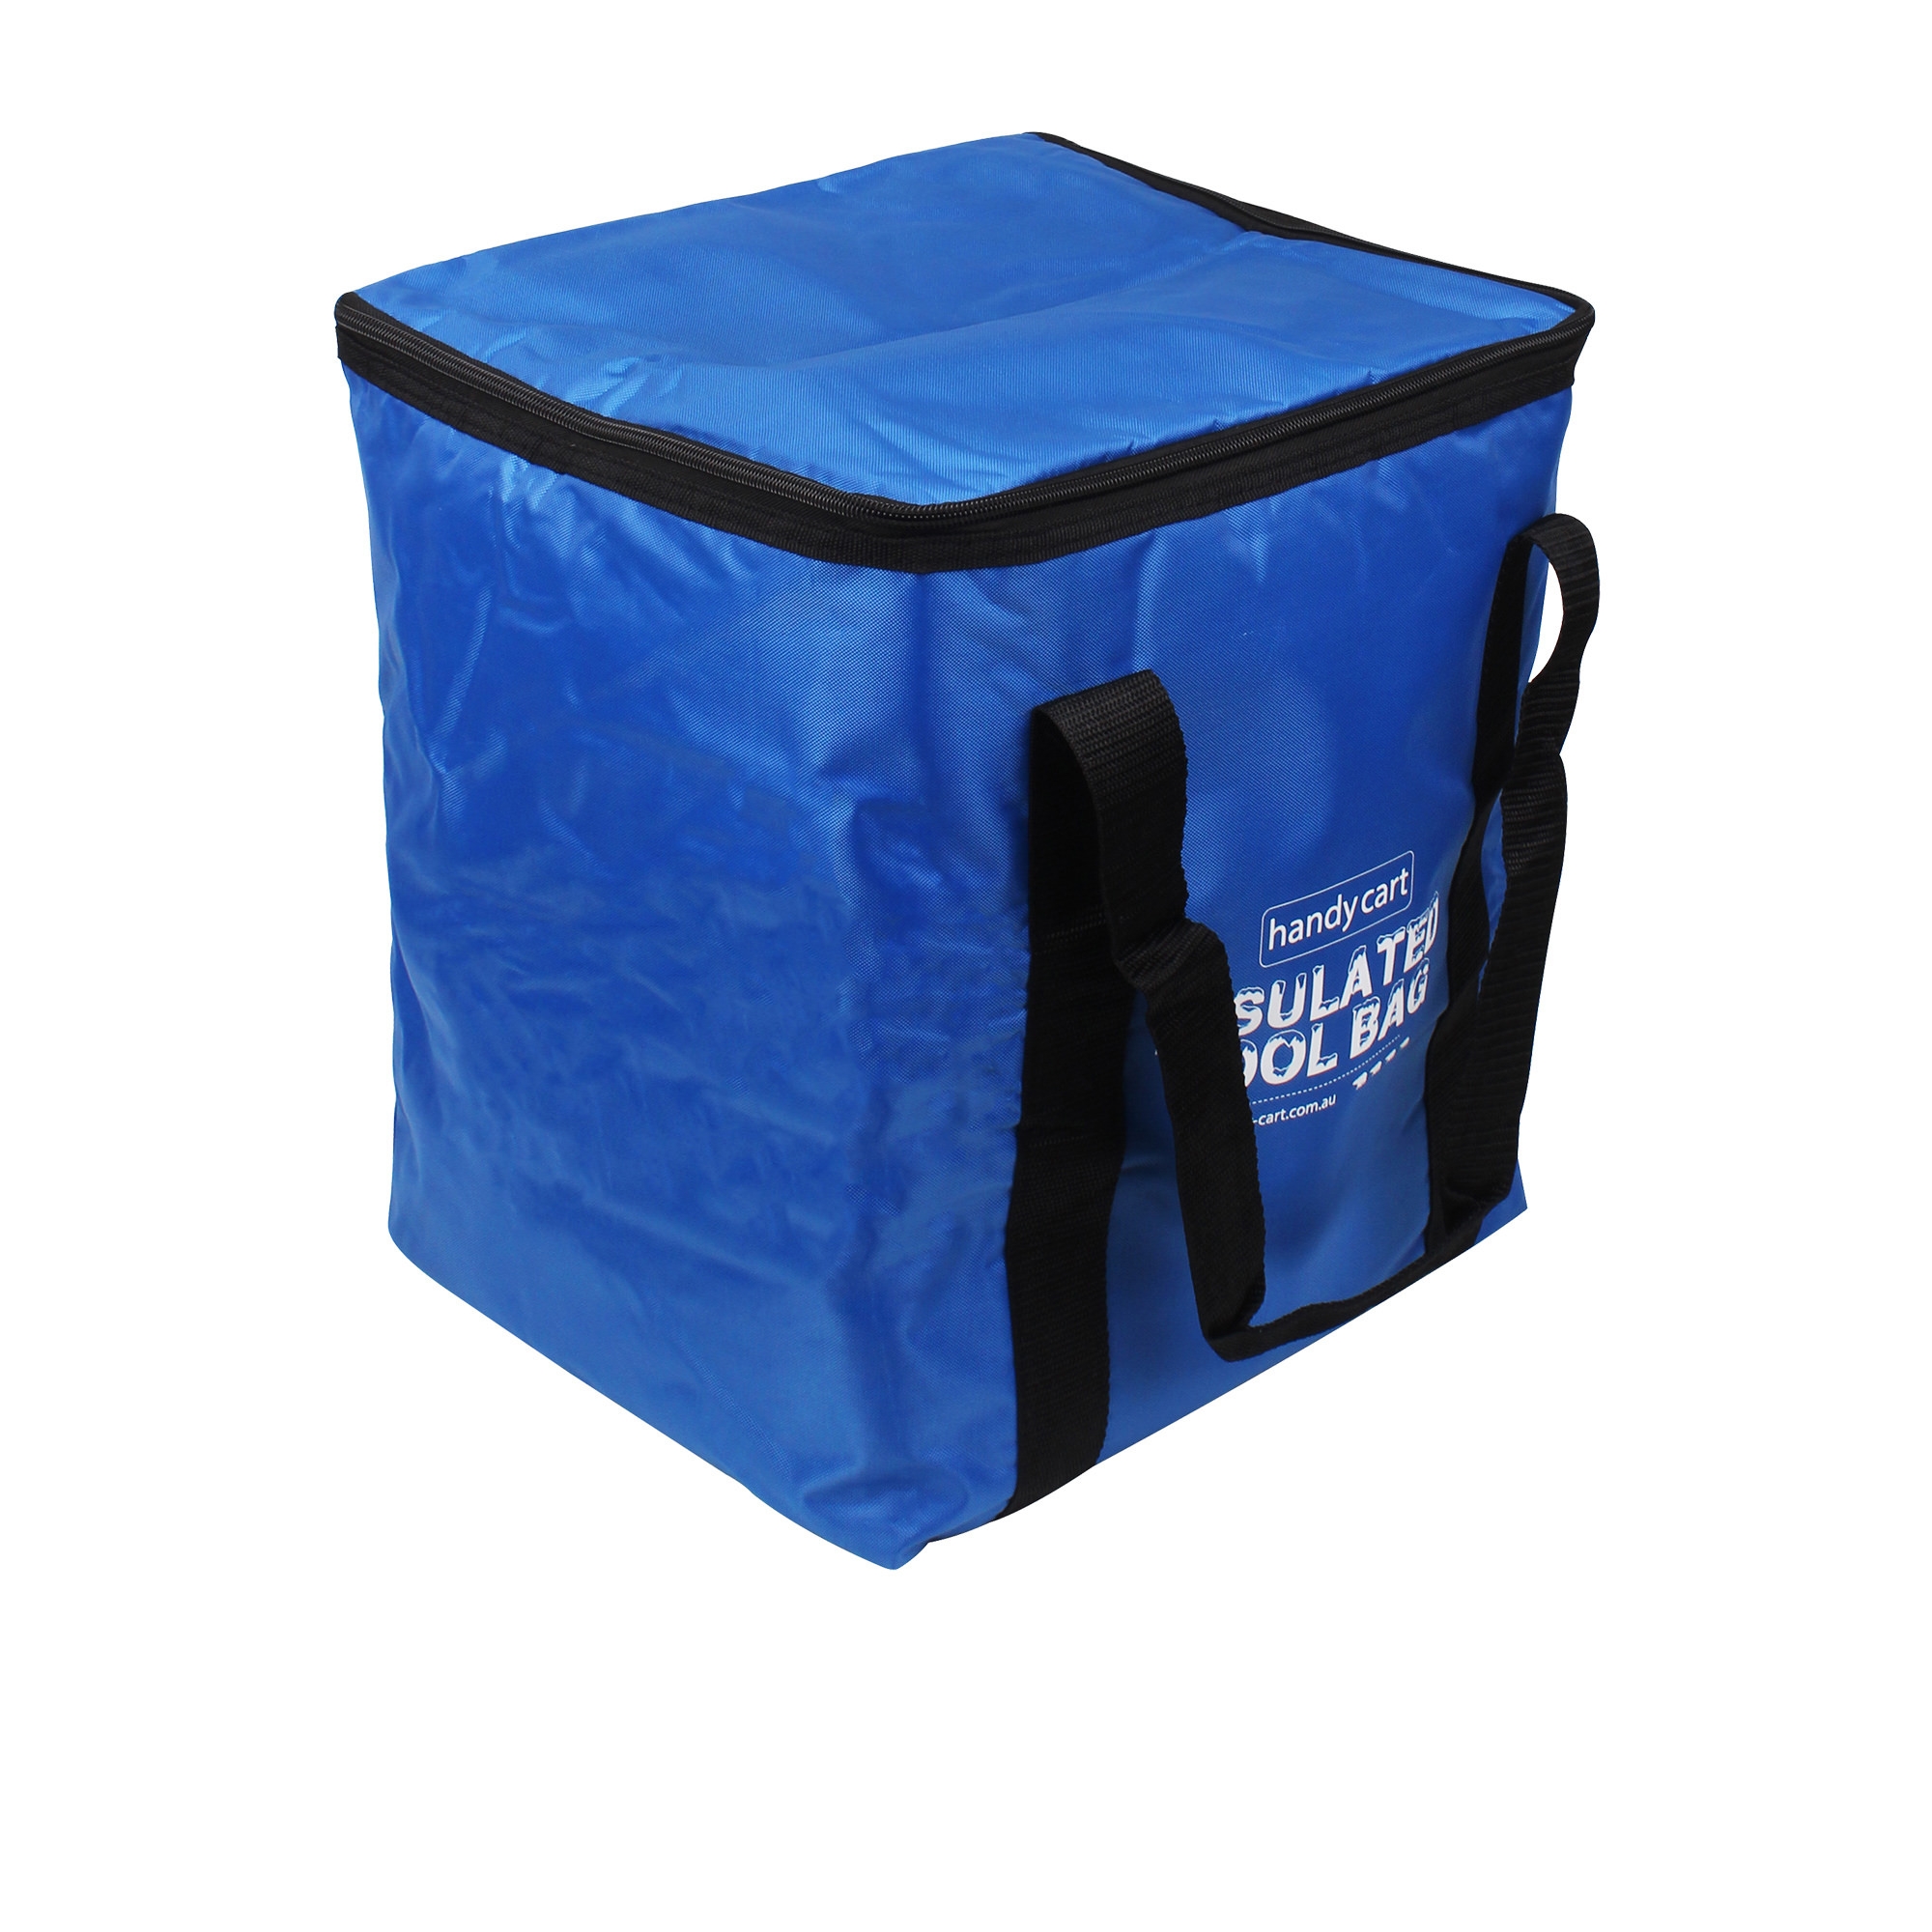 White Magic Handy Cart Insulated Cool Bag Jumbo Image 2